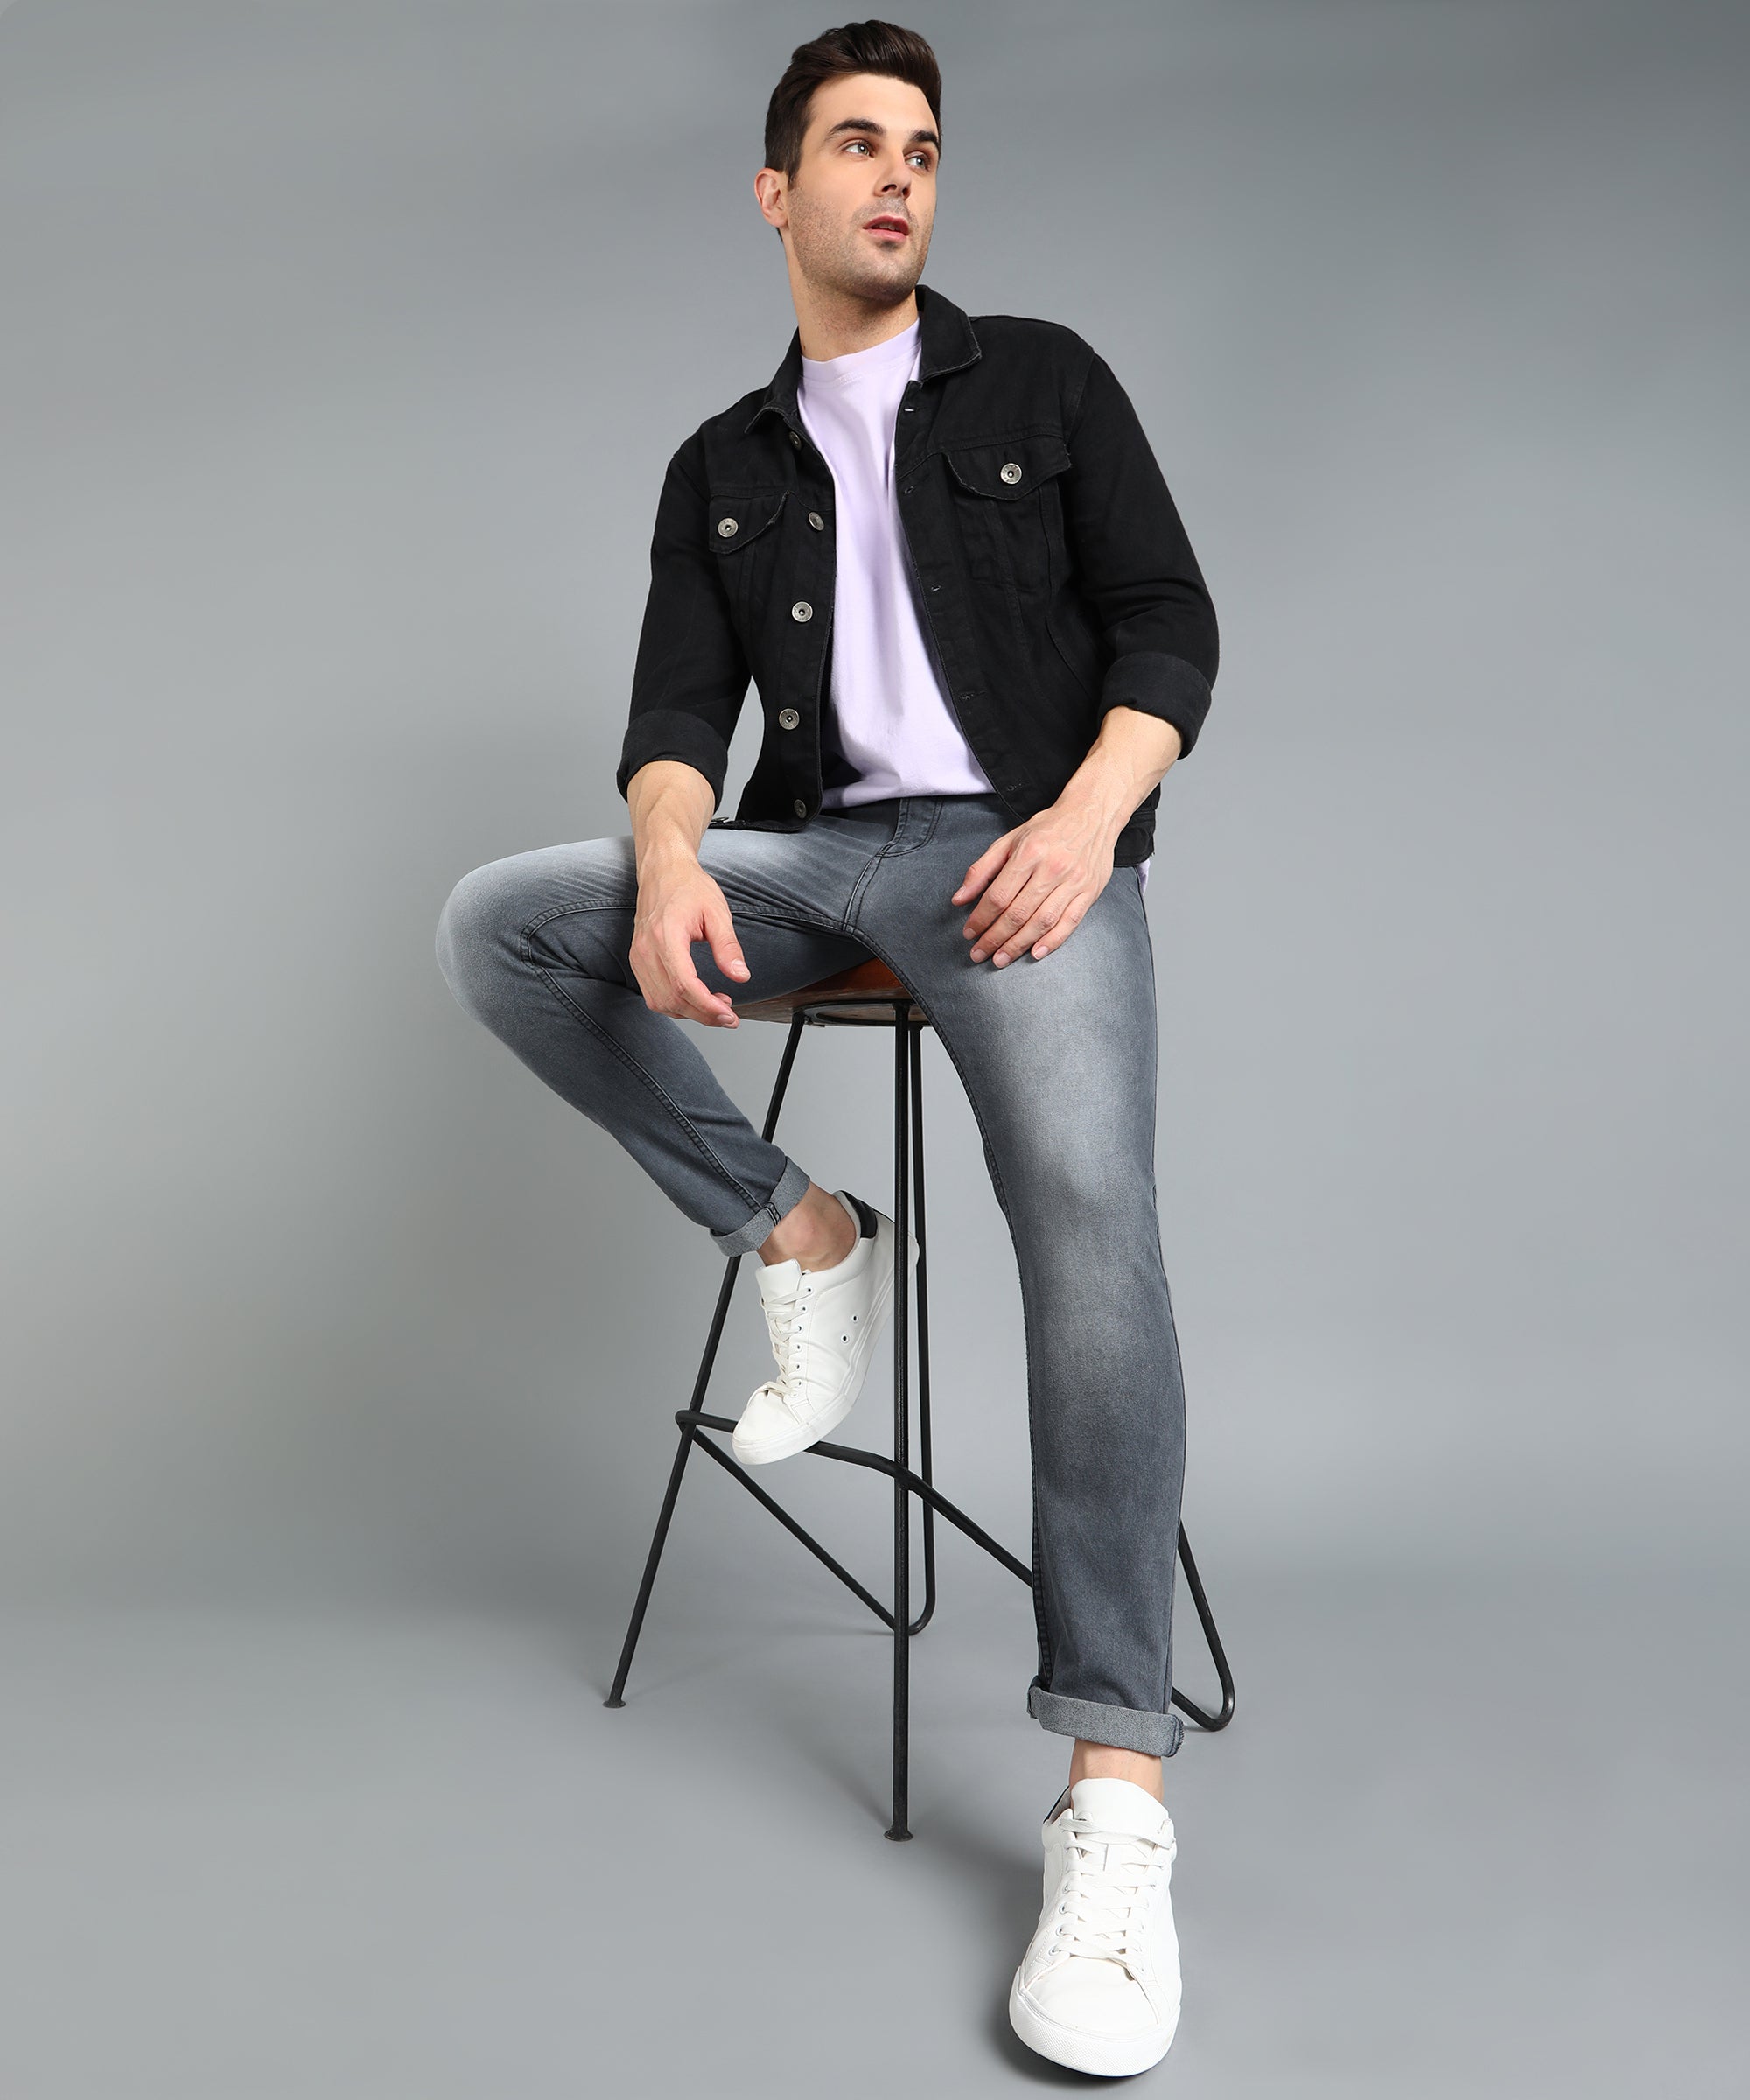 Men's Grey Slim Fit Stretchable Jeans